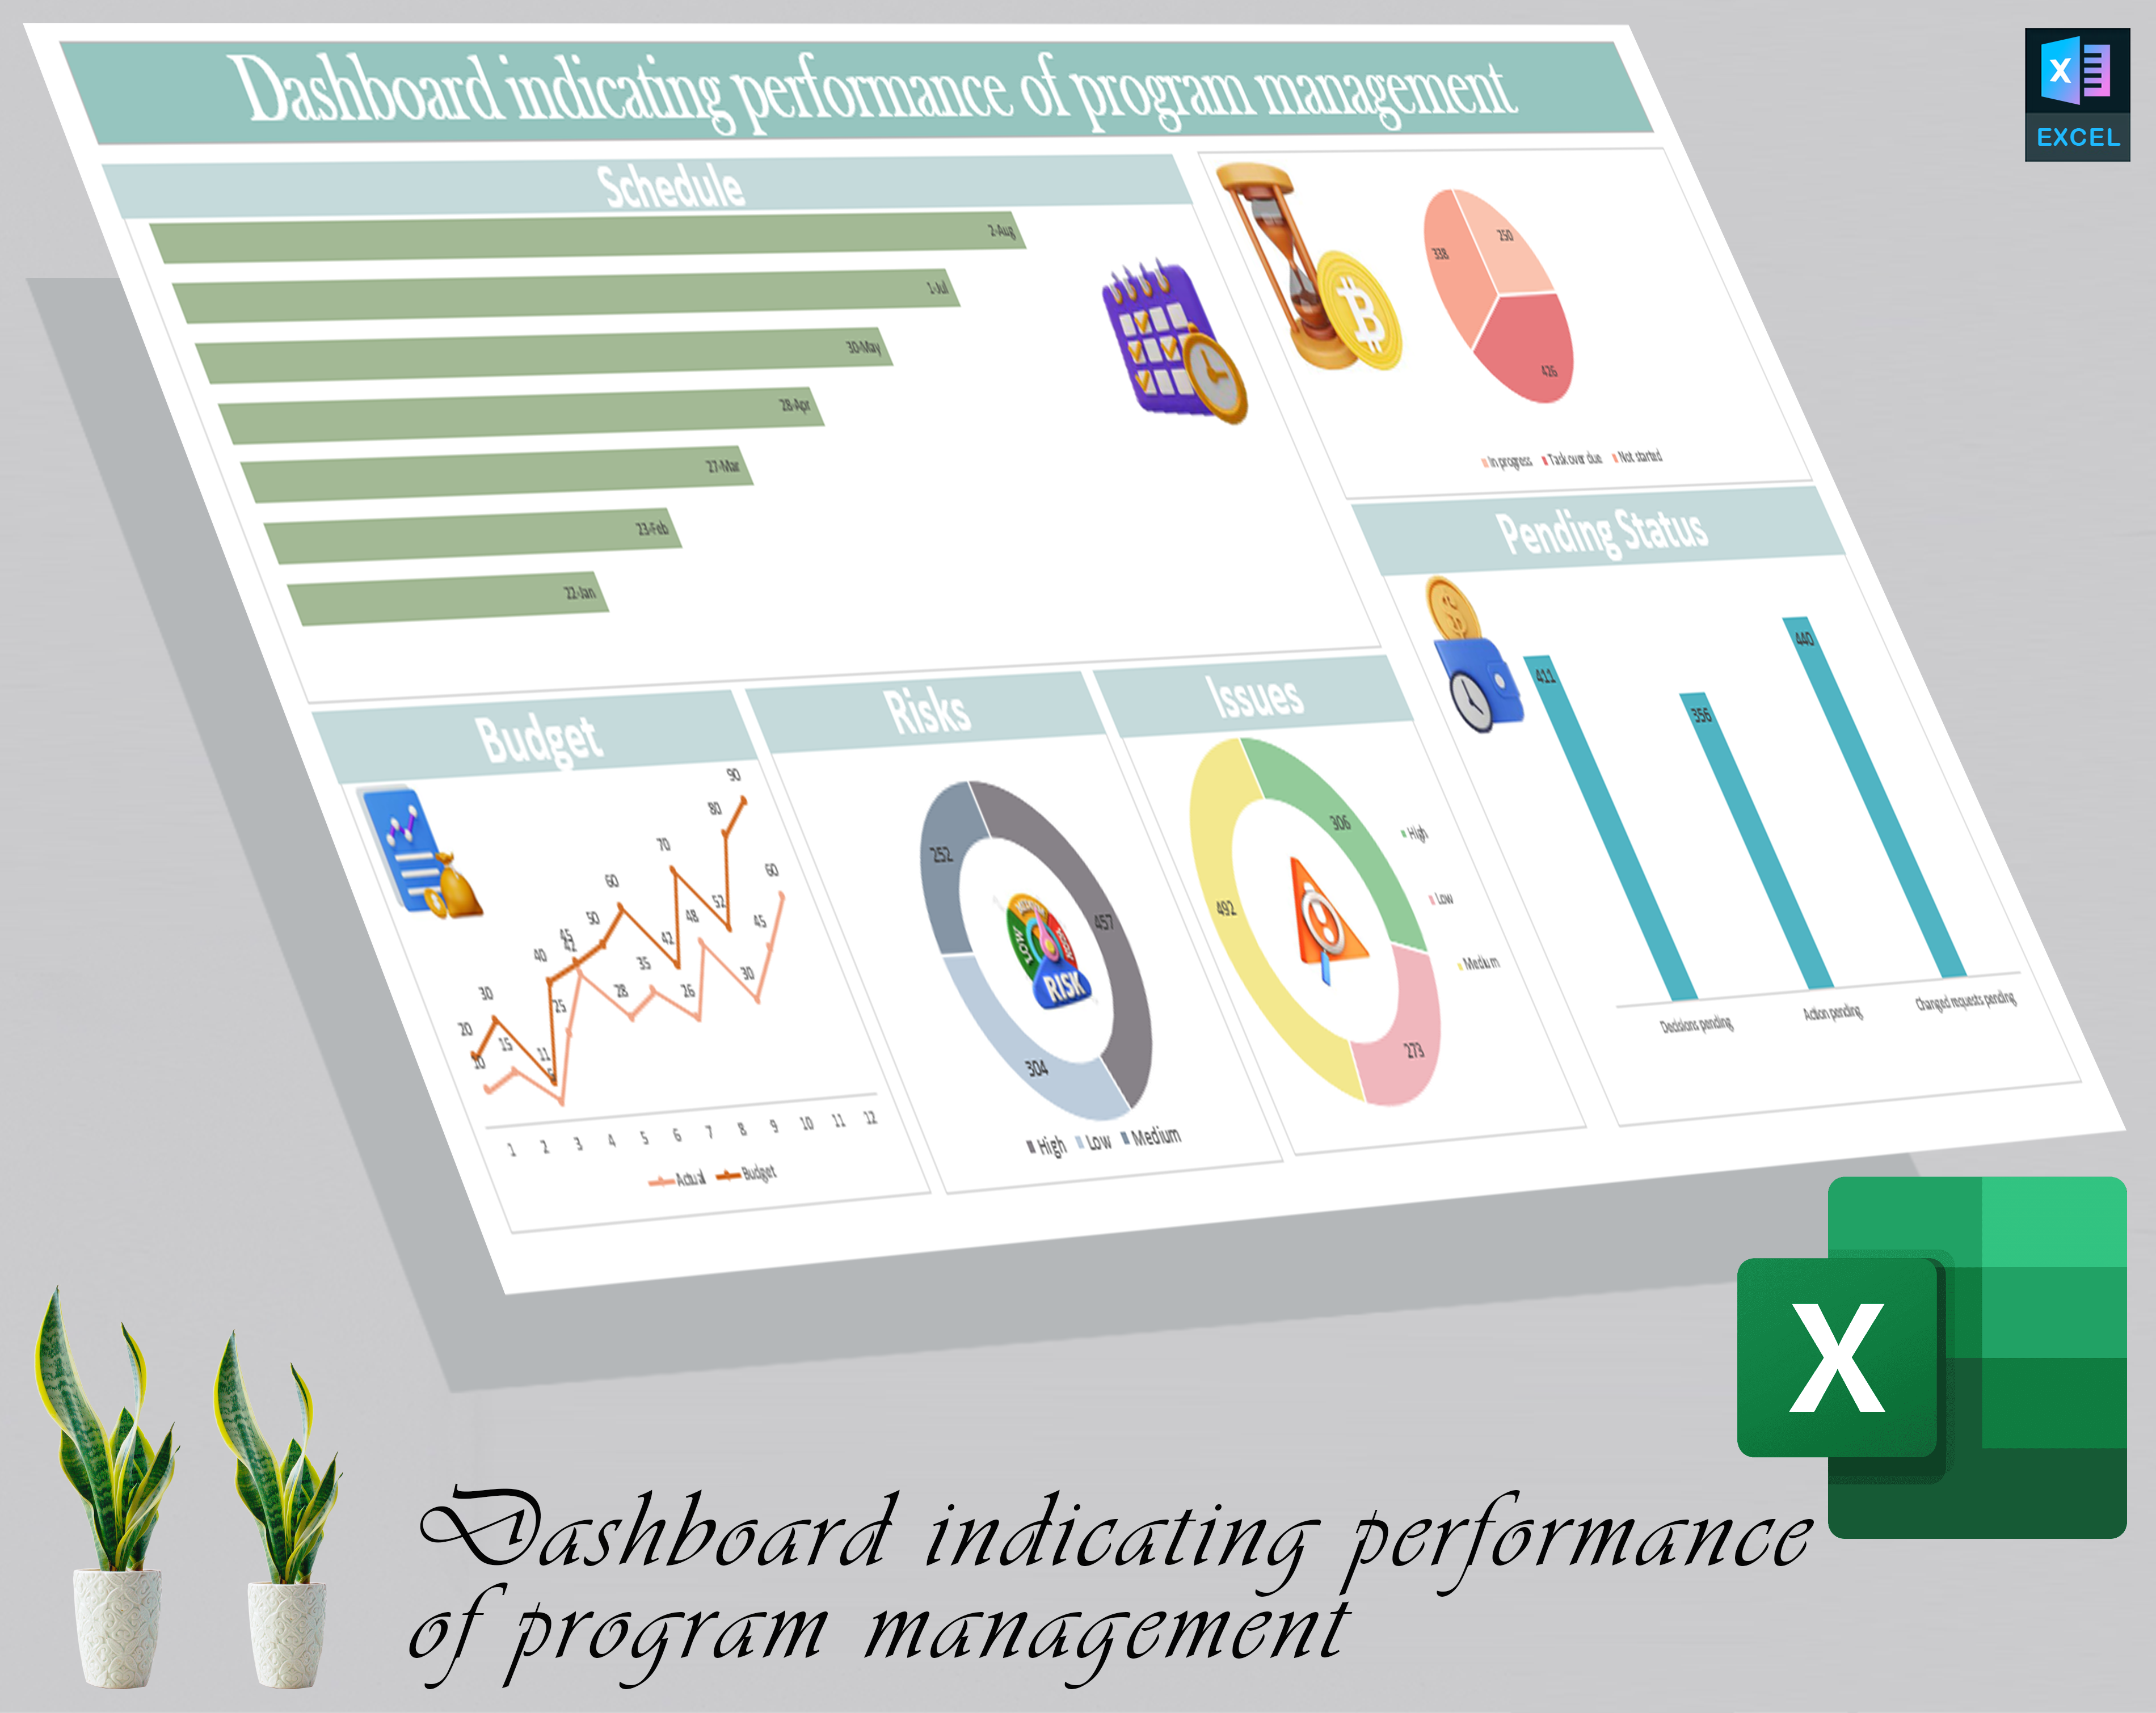 Dashboard indicating performance of program management